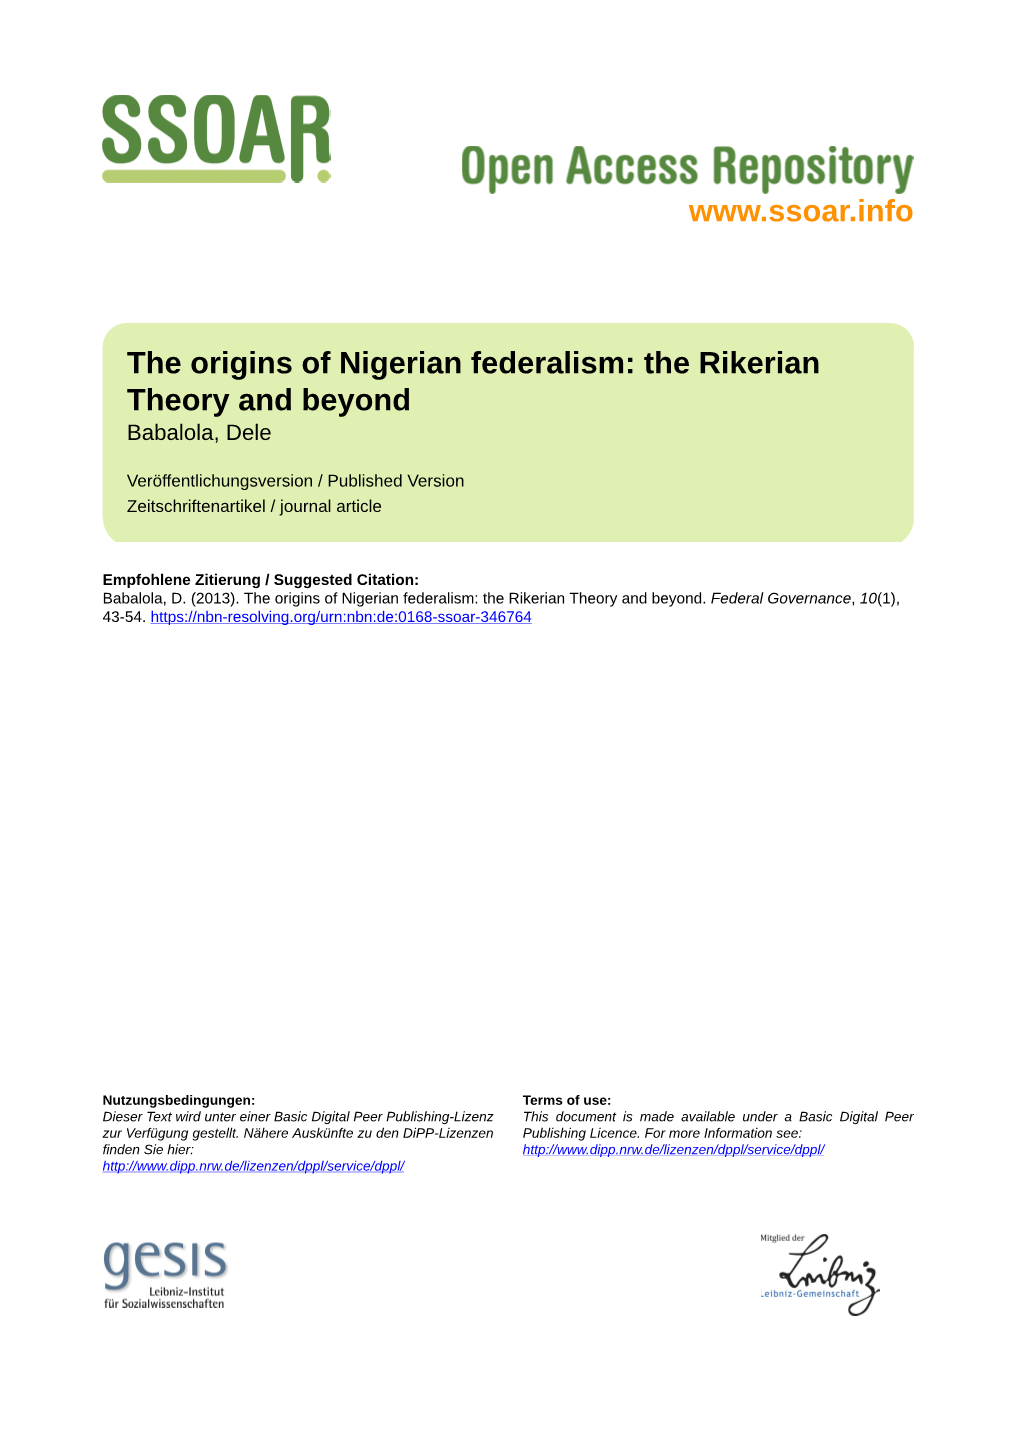 The Origins of Nigerian Federalism: the Rikerian